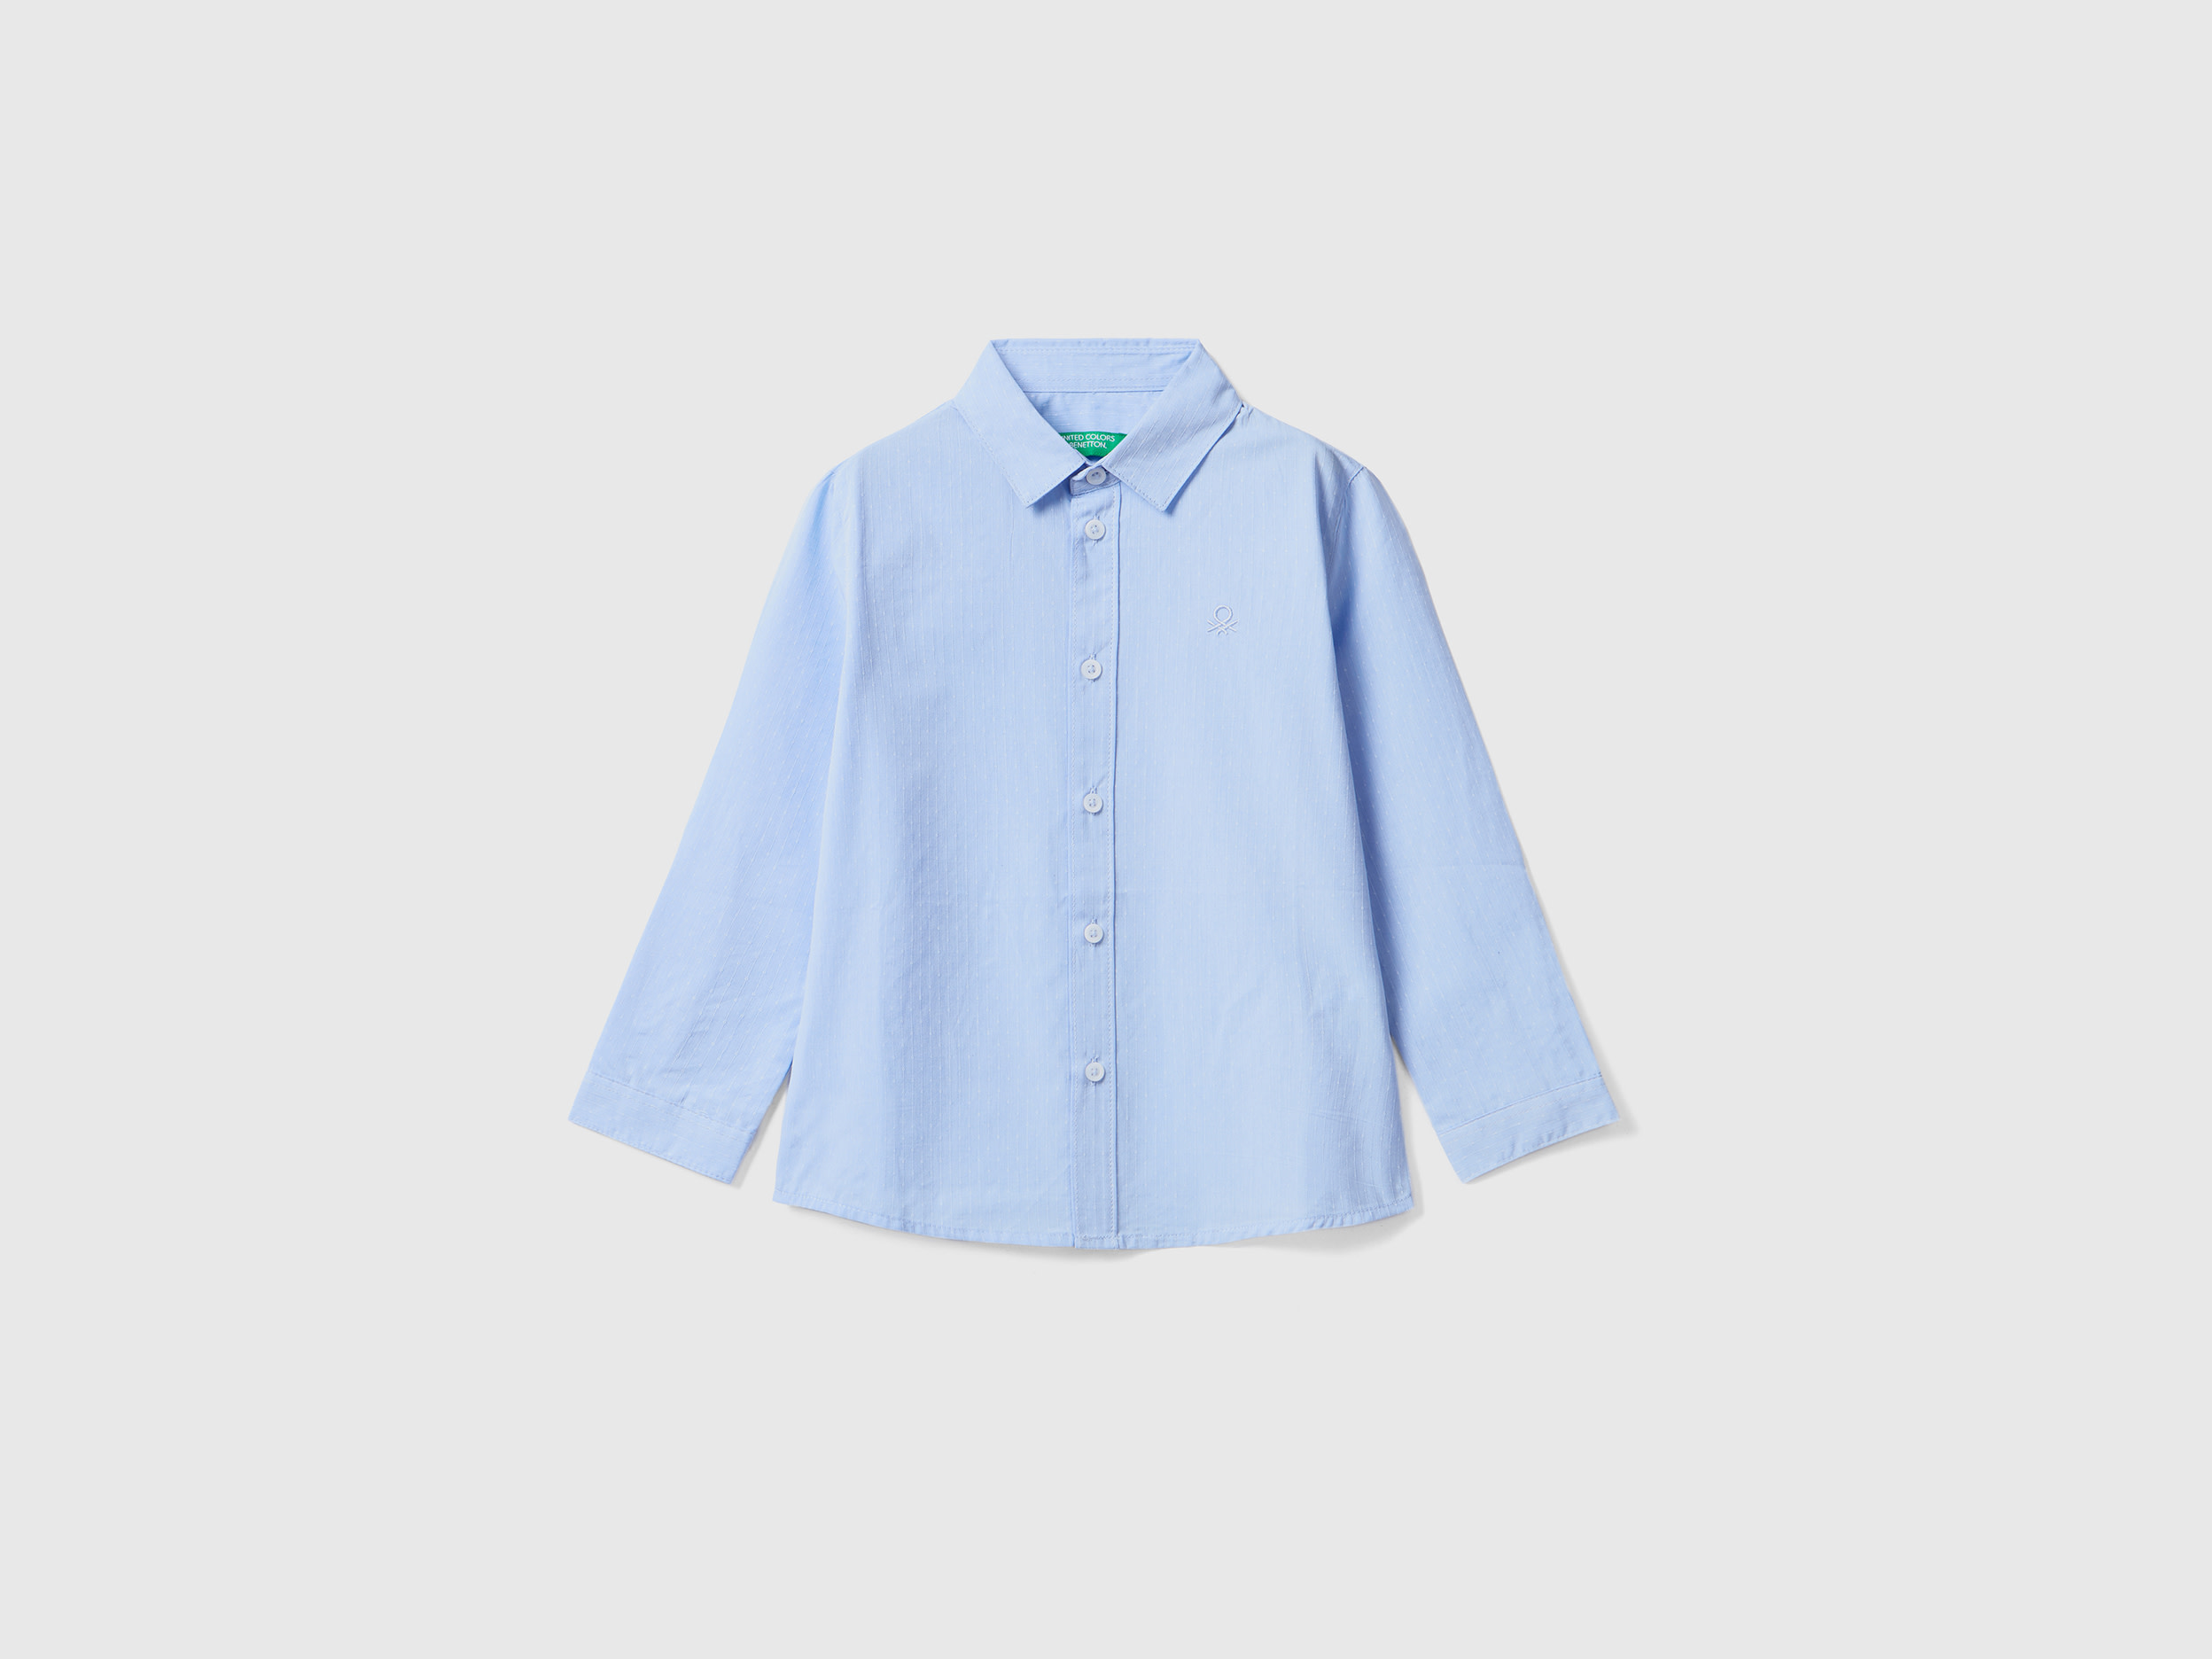 Benetton, Classic Shirt In Pure Cotton, size 12-18, Sky Blue, Kids